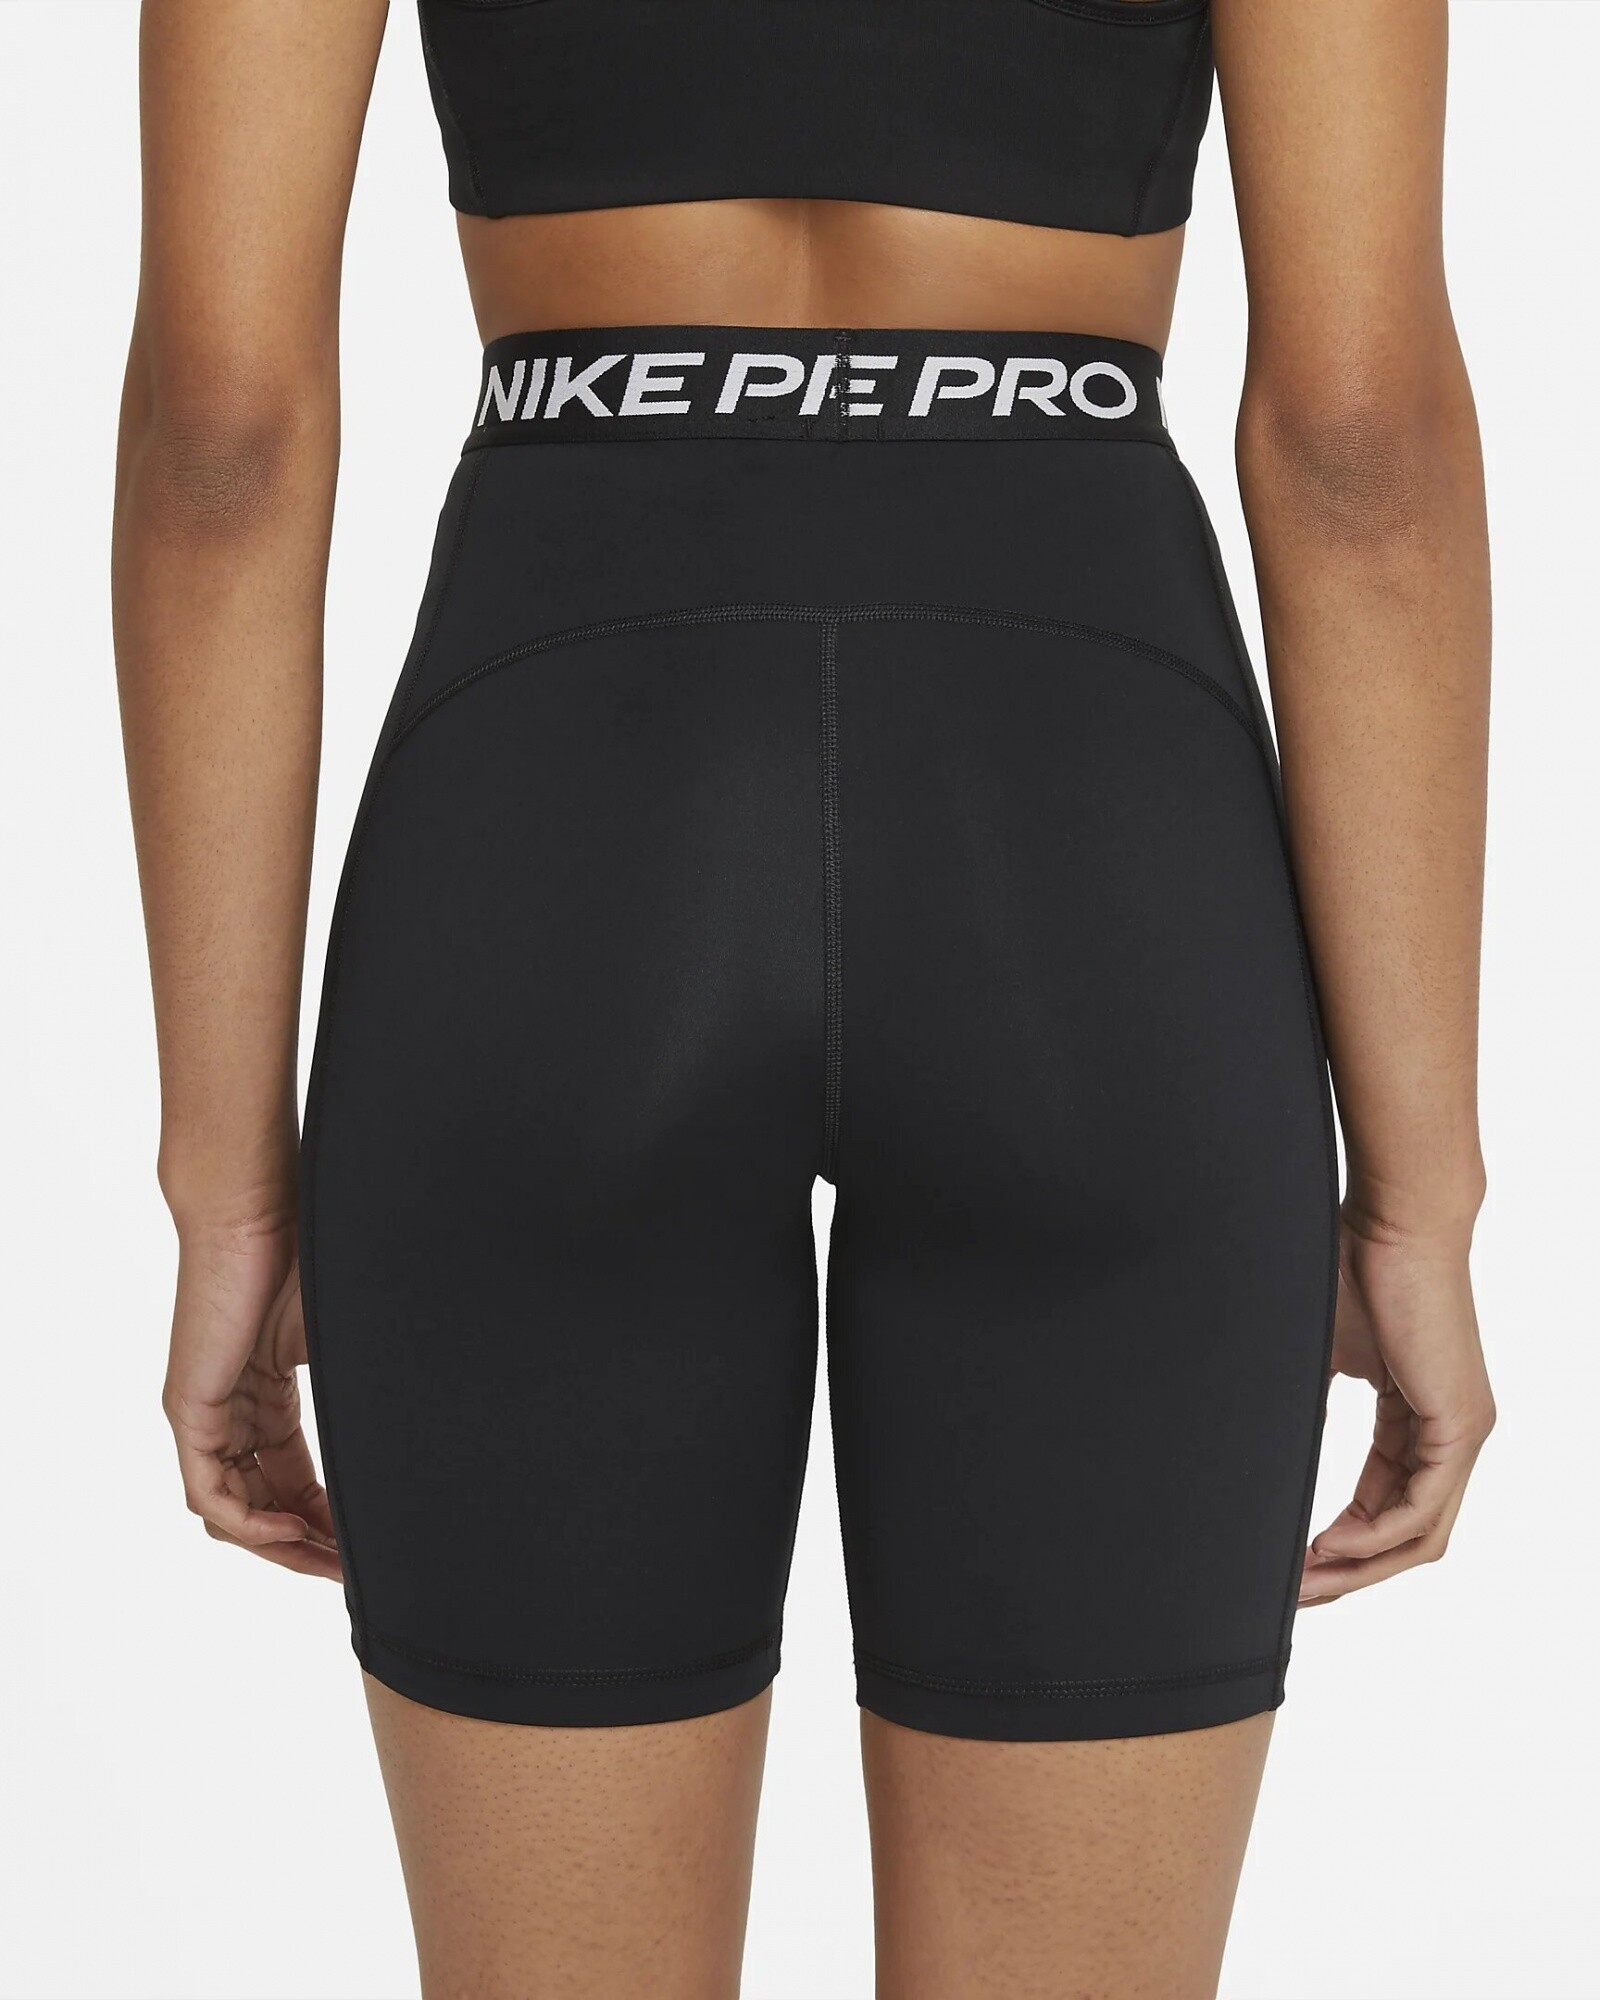 Short Nike Pro 365 Mujer — La Cancha